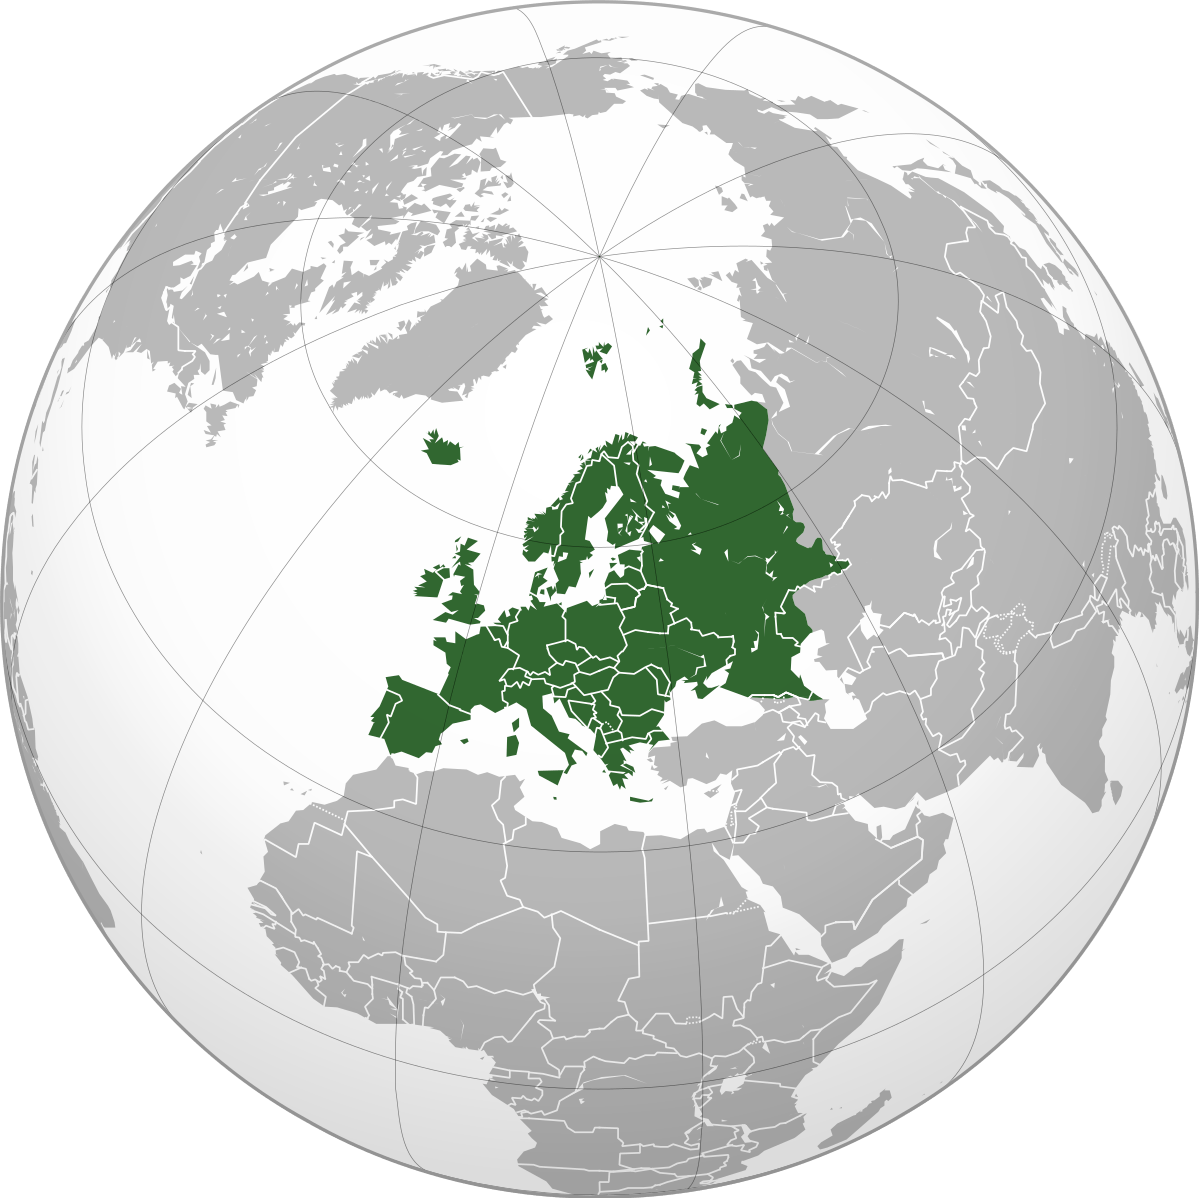 countries in europe - Class 7 - Quizizz